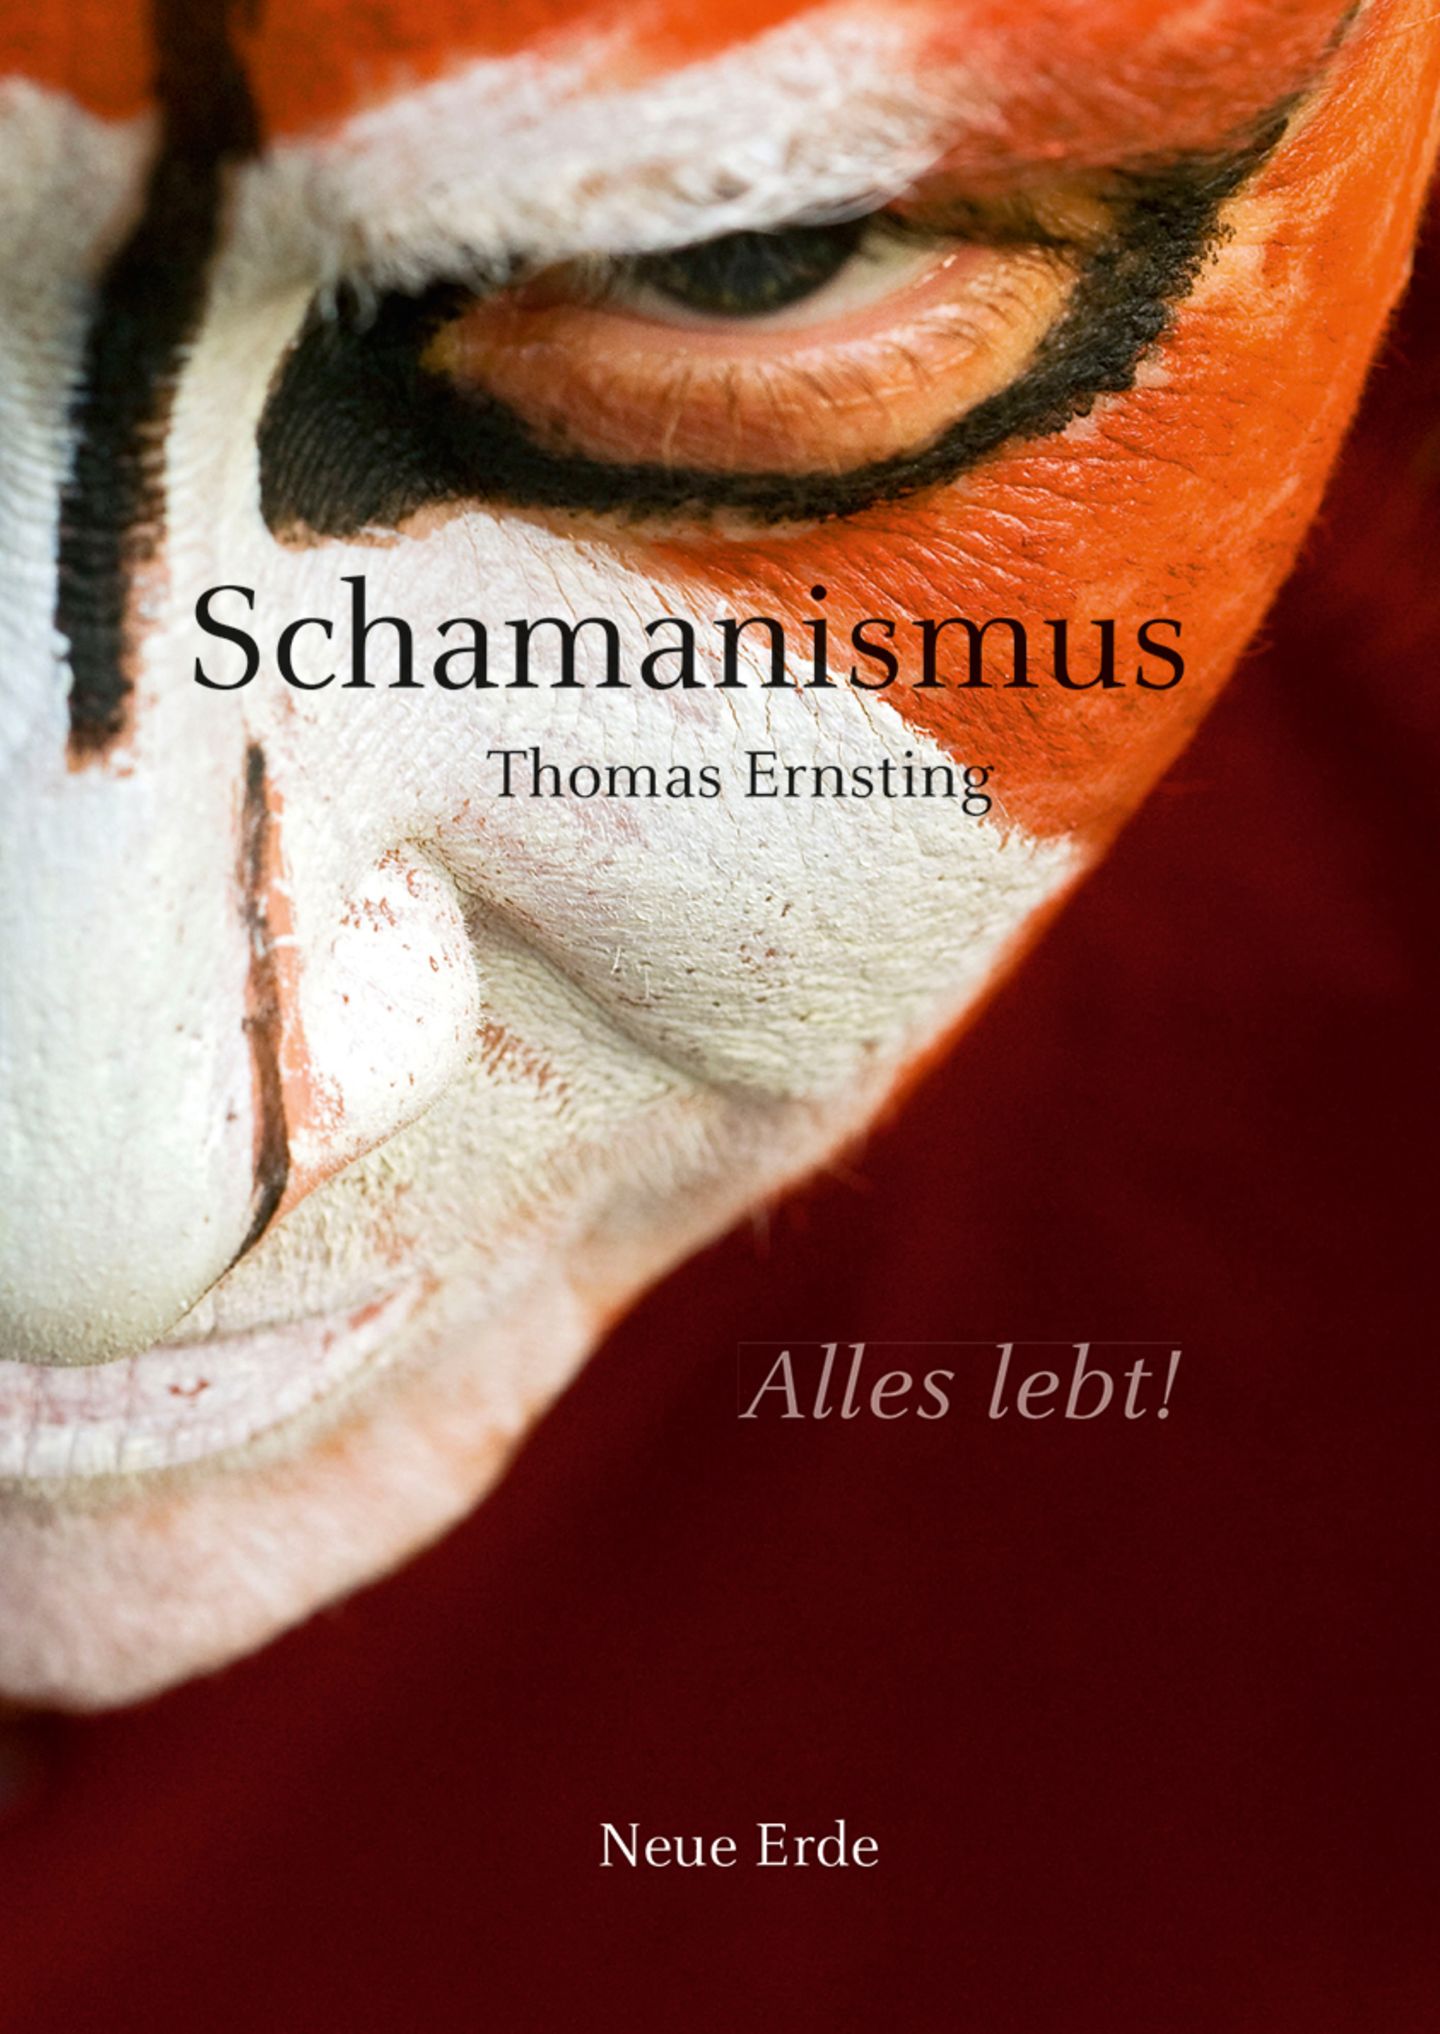 "Schamanismus: Alles lebt"